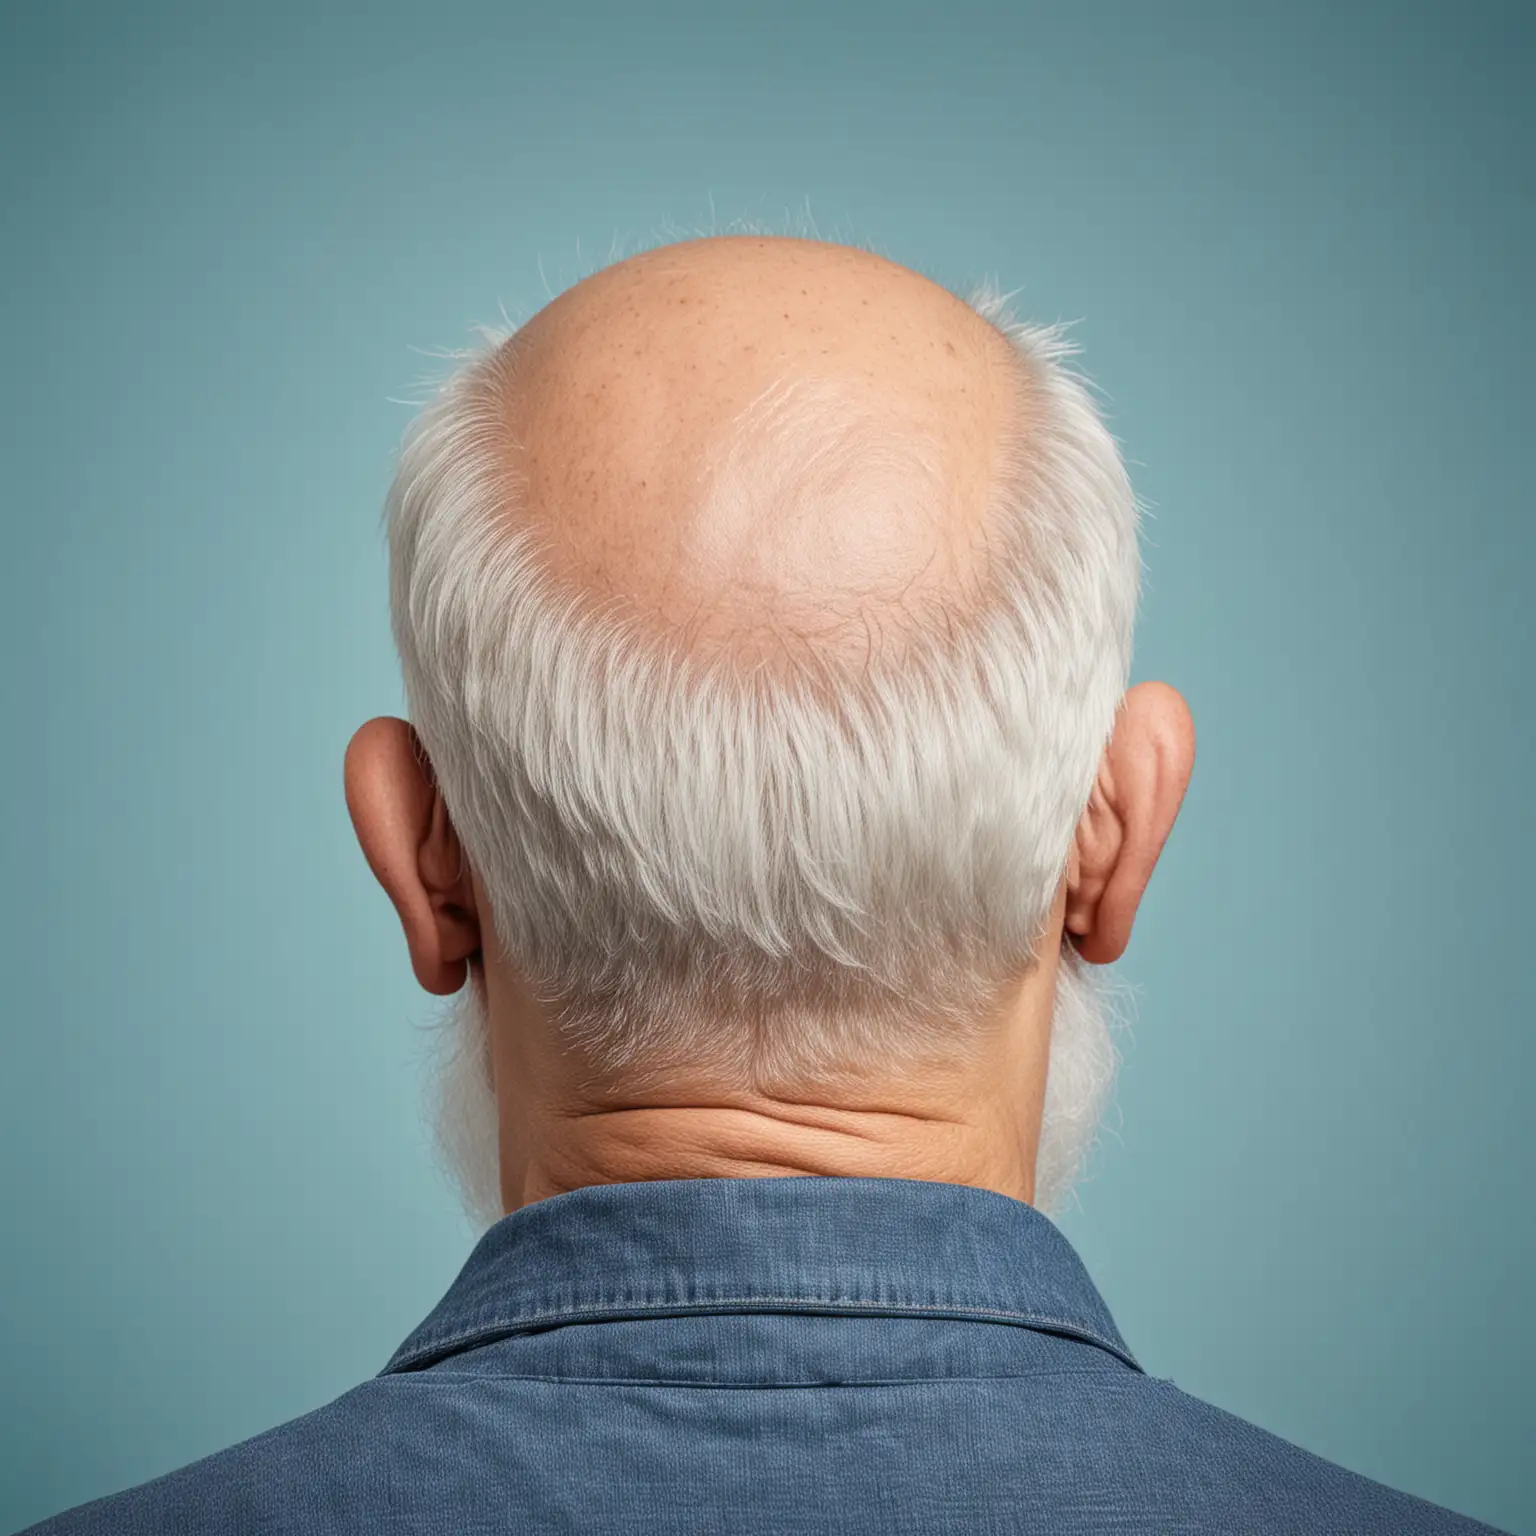 european chubby elderly man, high resolution photo, back of head, looking behind, no hair, long white beard, back view of man, closeup blue background